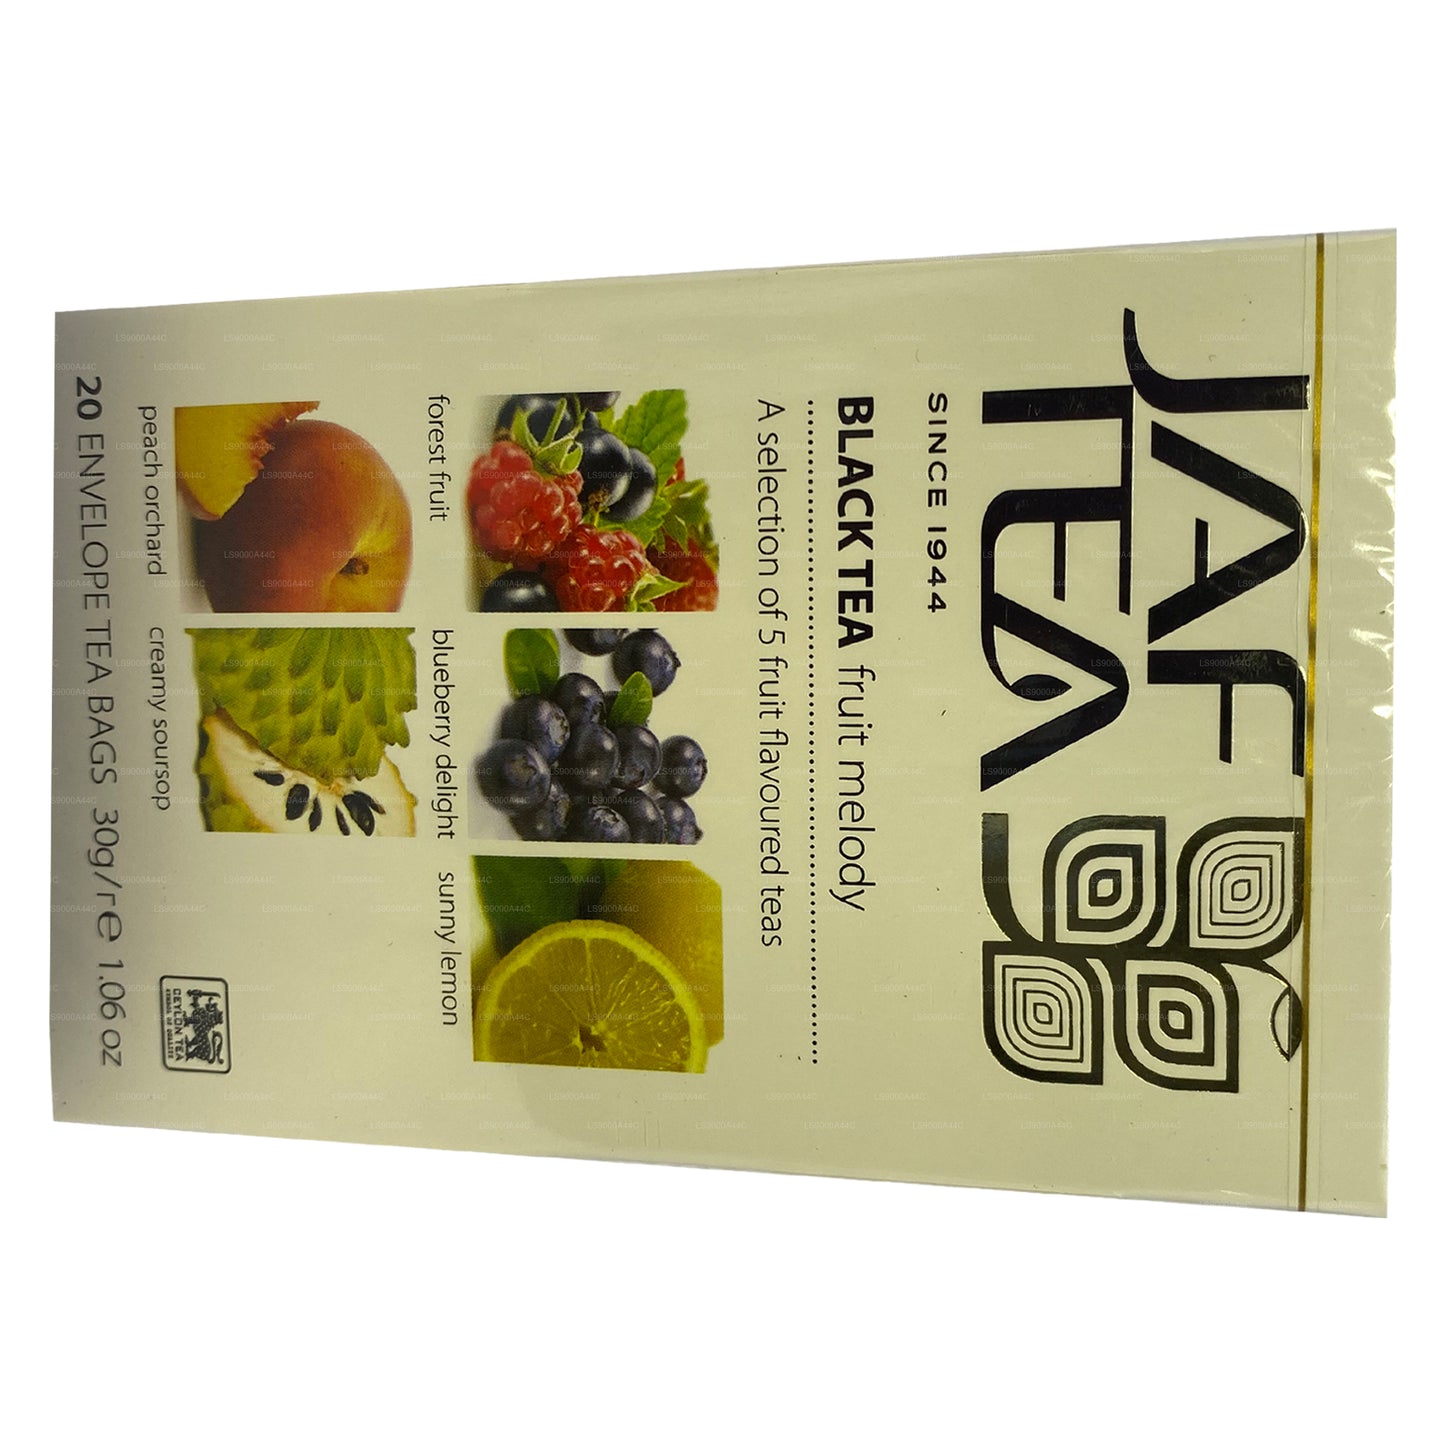 Jaf Tea Pure Fruits 系列红茶水果旋律 (30g) 20 个茶包